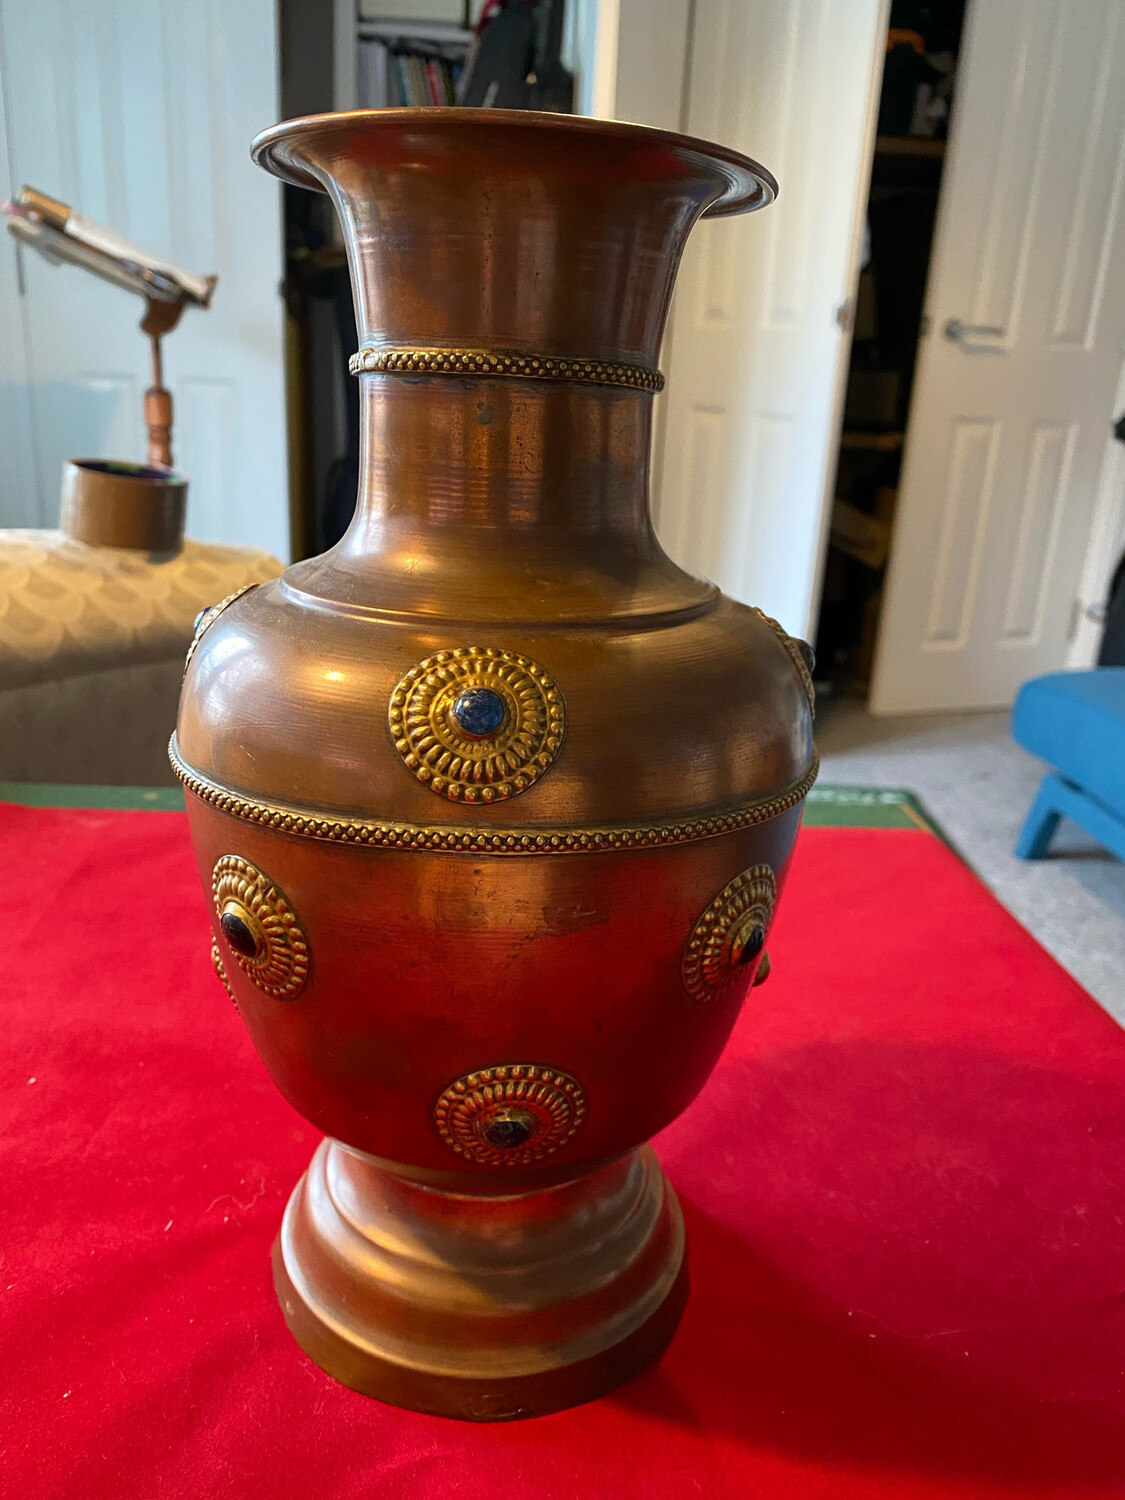 Copper Vase with inset stones - asian or indian origin